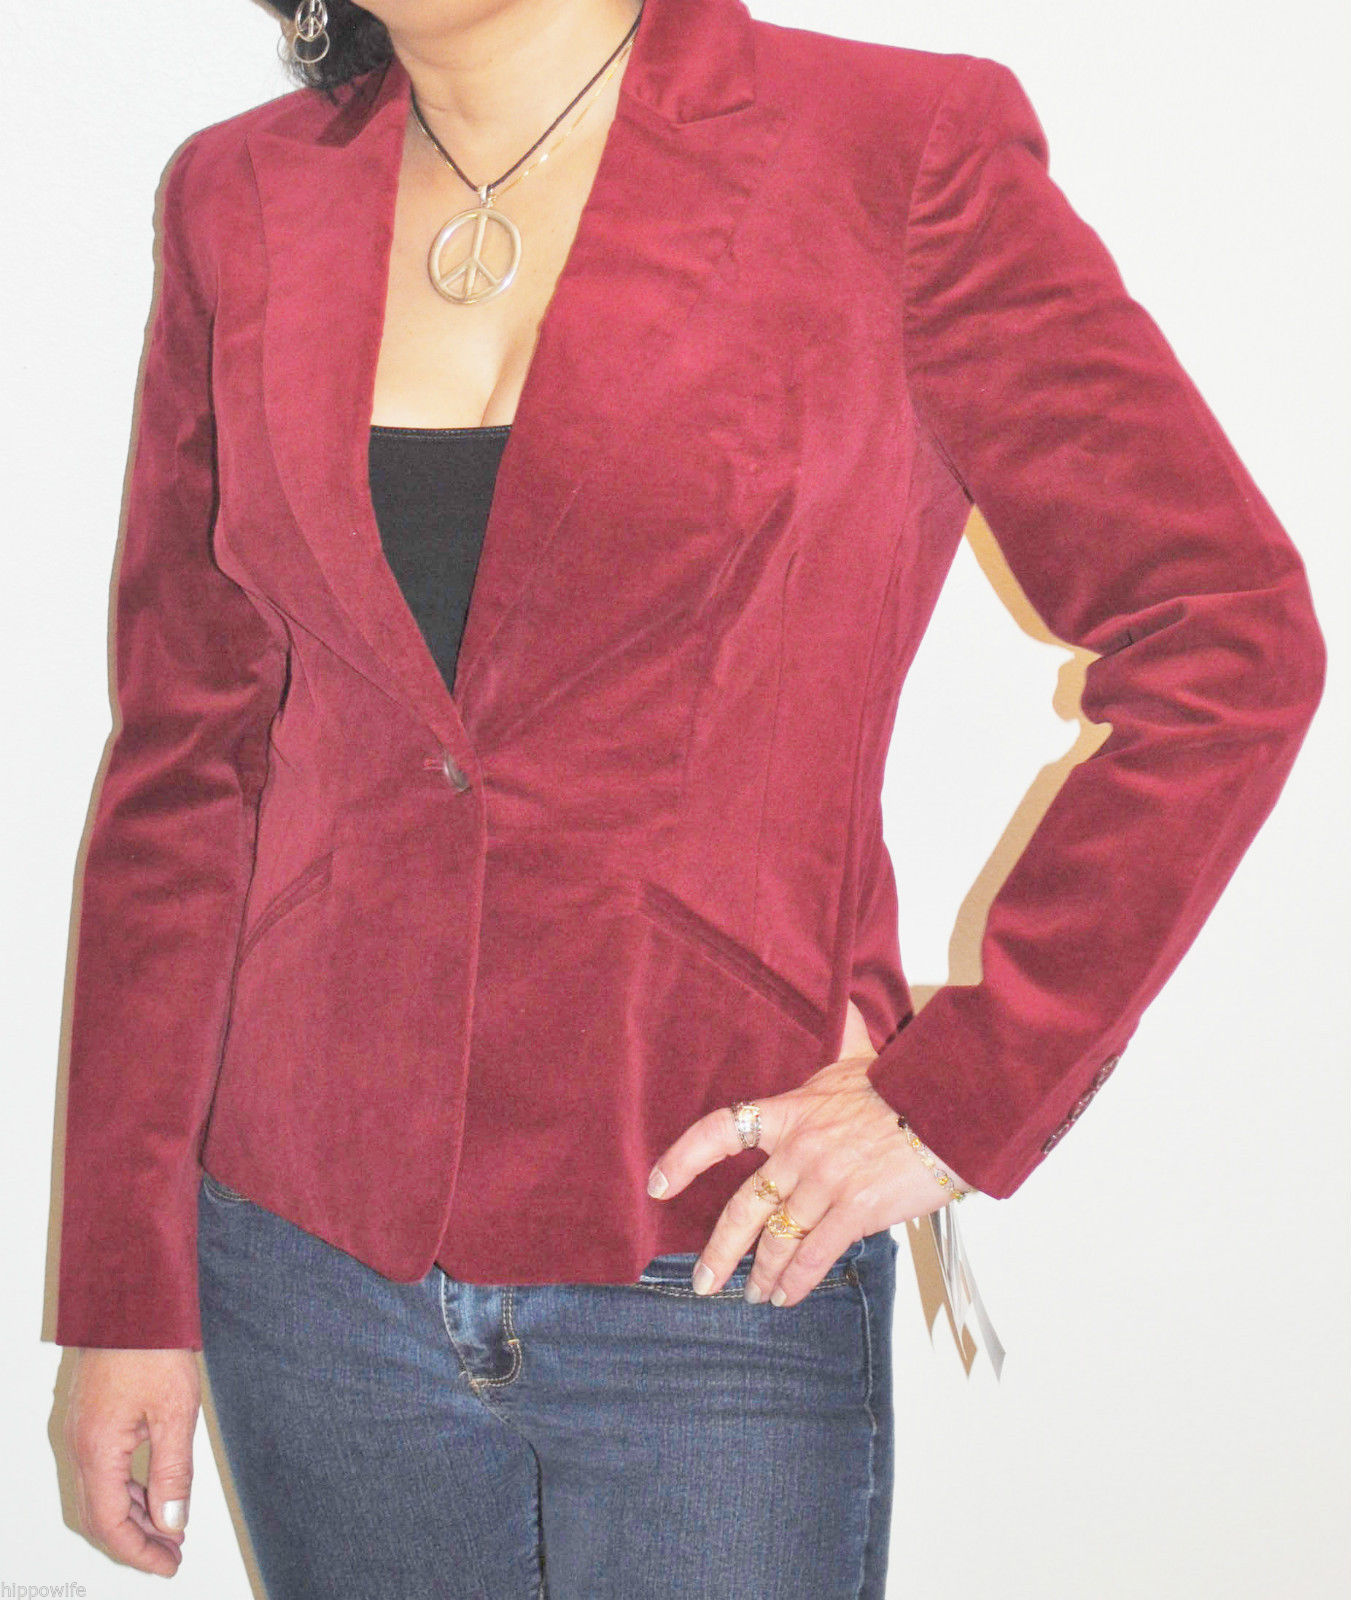 Jones New York Womens Ruby Wine Velveteen Blazer Jacket NWT $239 CARDINAL RED!